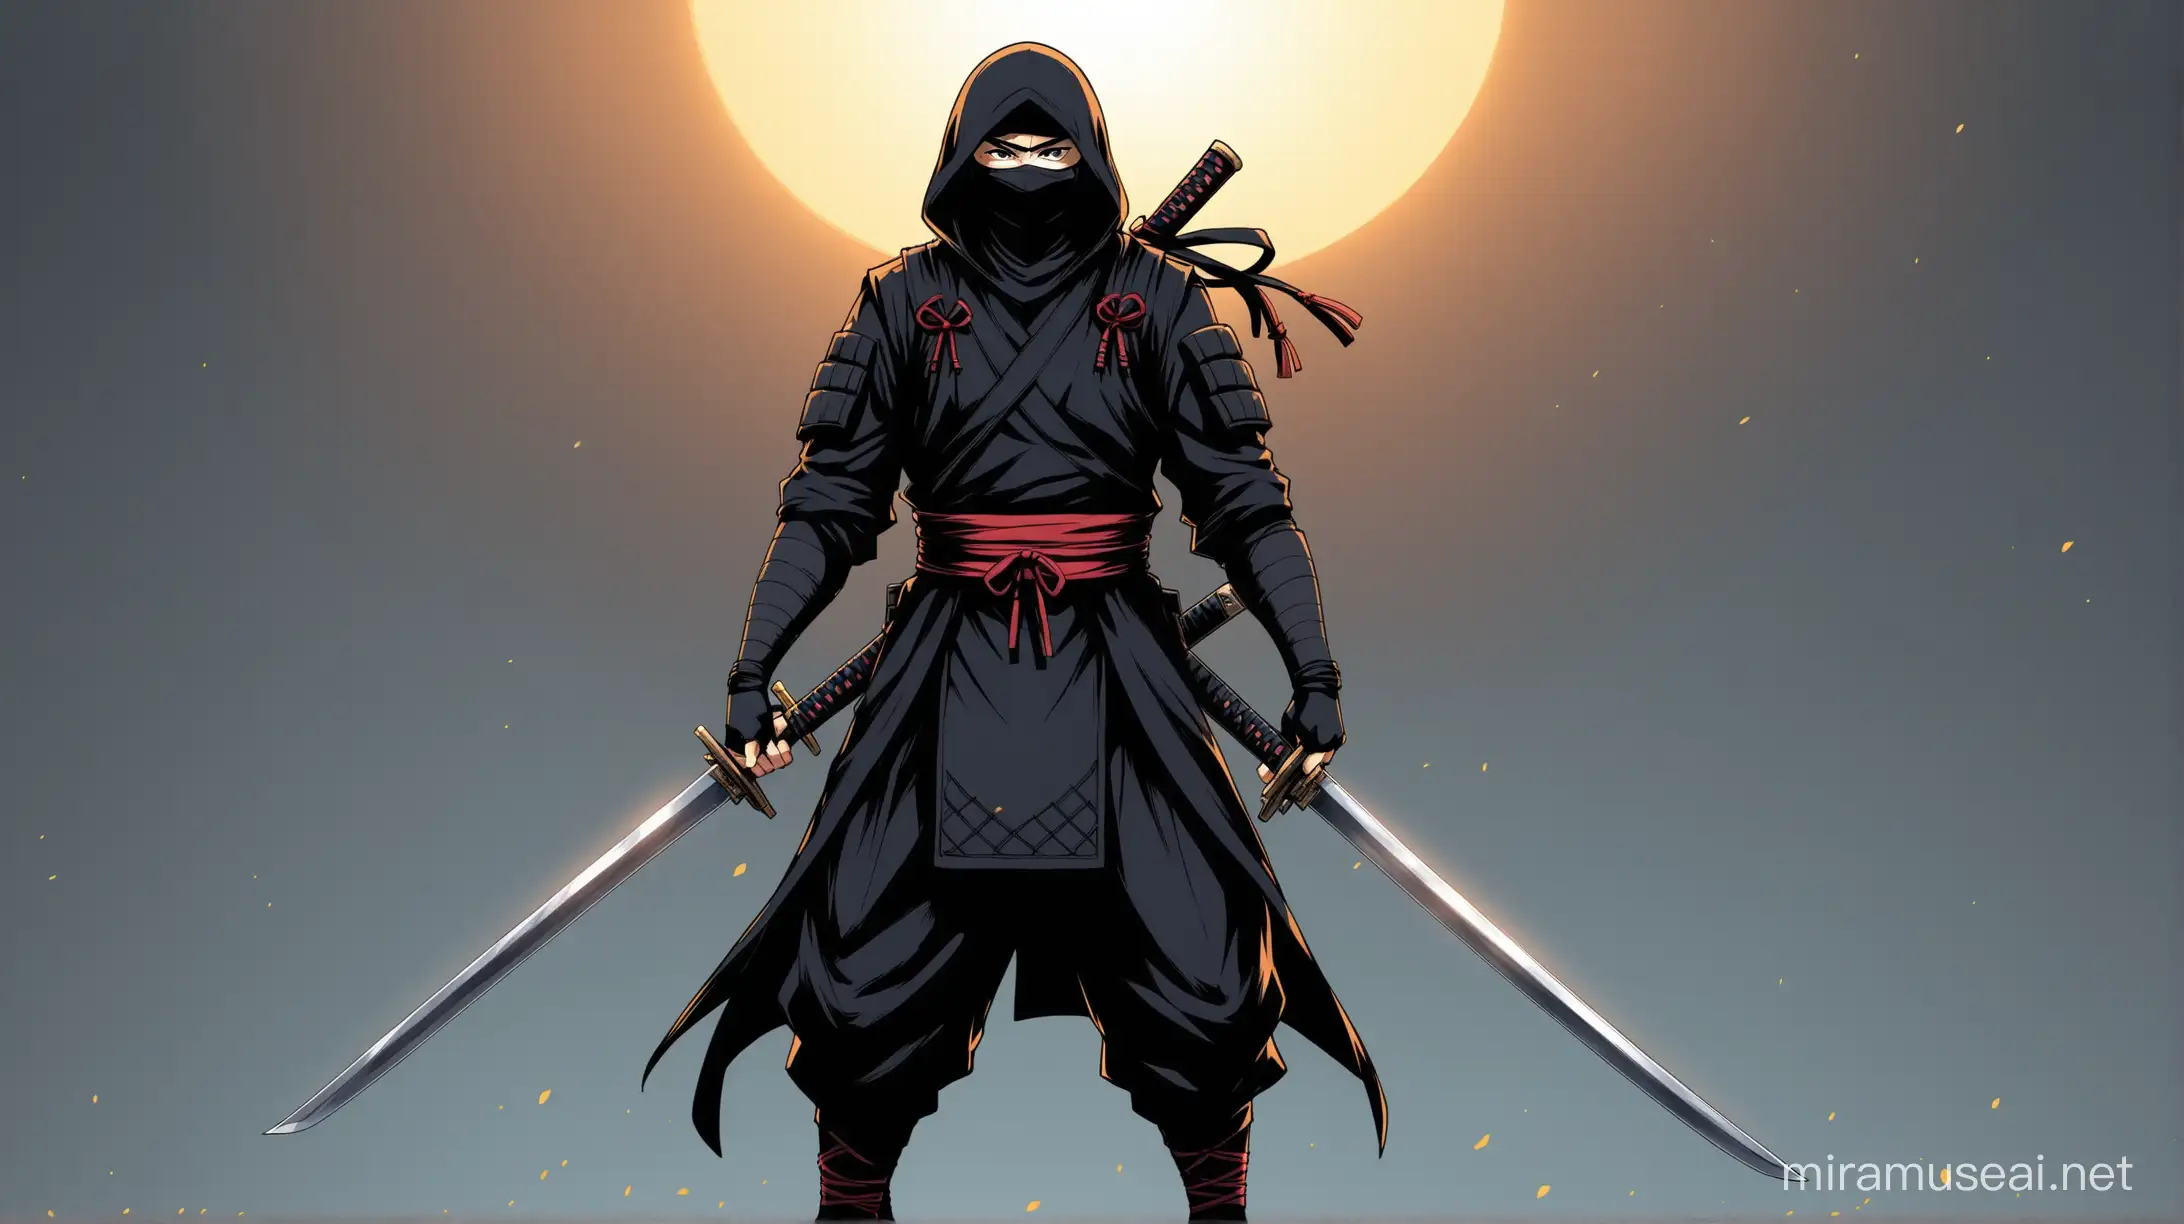 Ninja Black, sword on back, standing